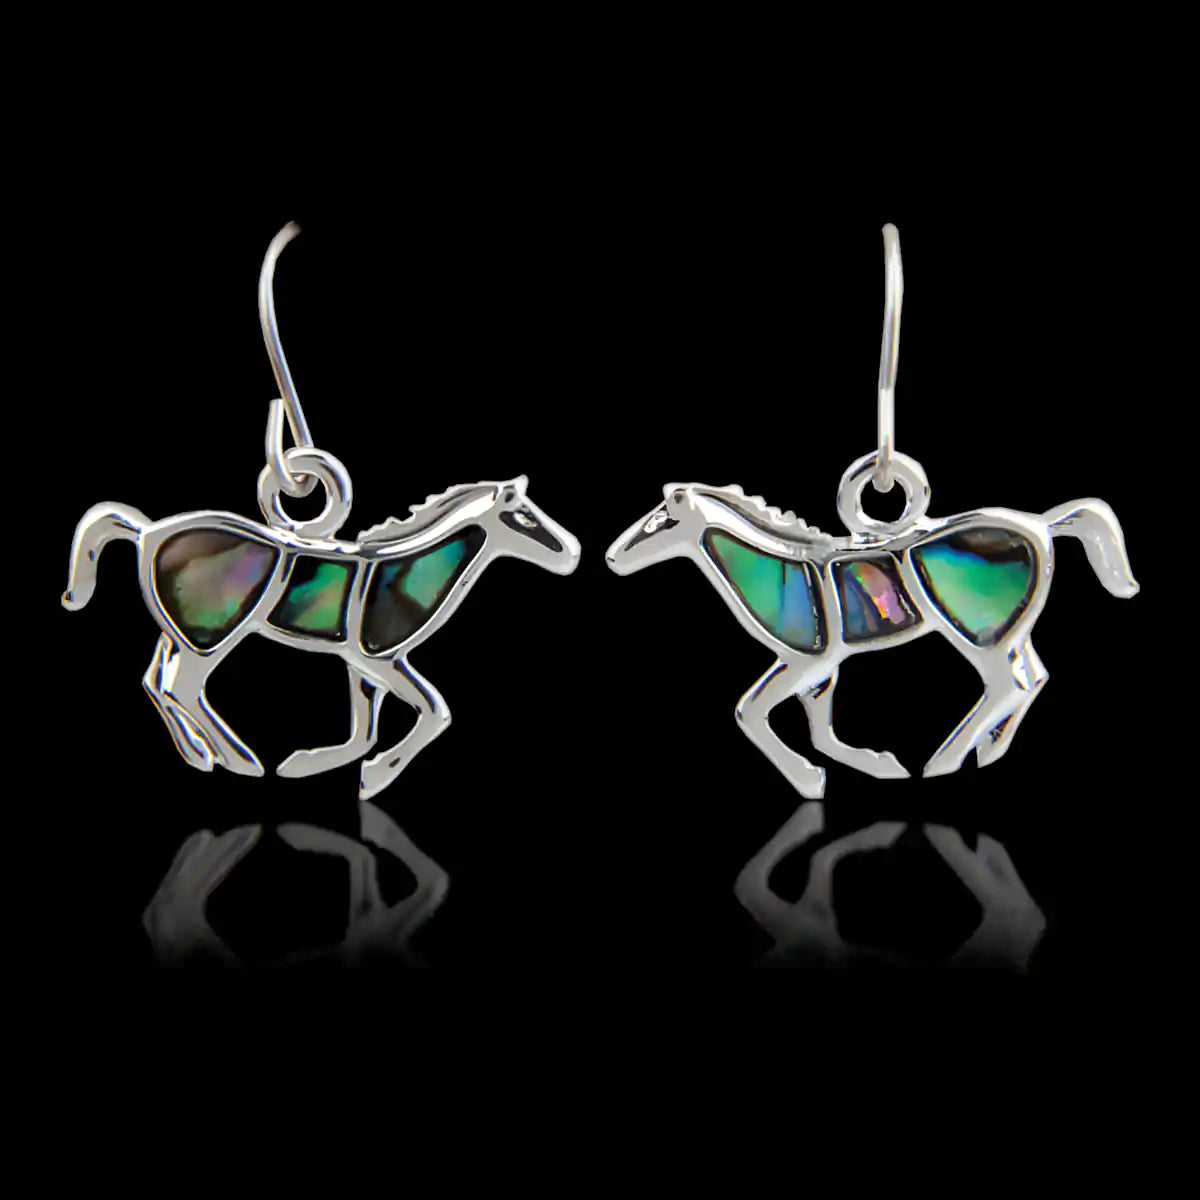 Glacier pearle stallions earrings